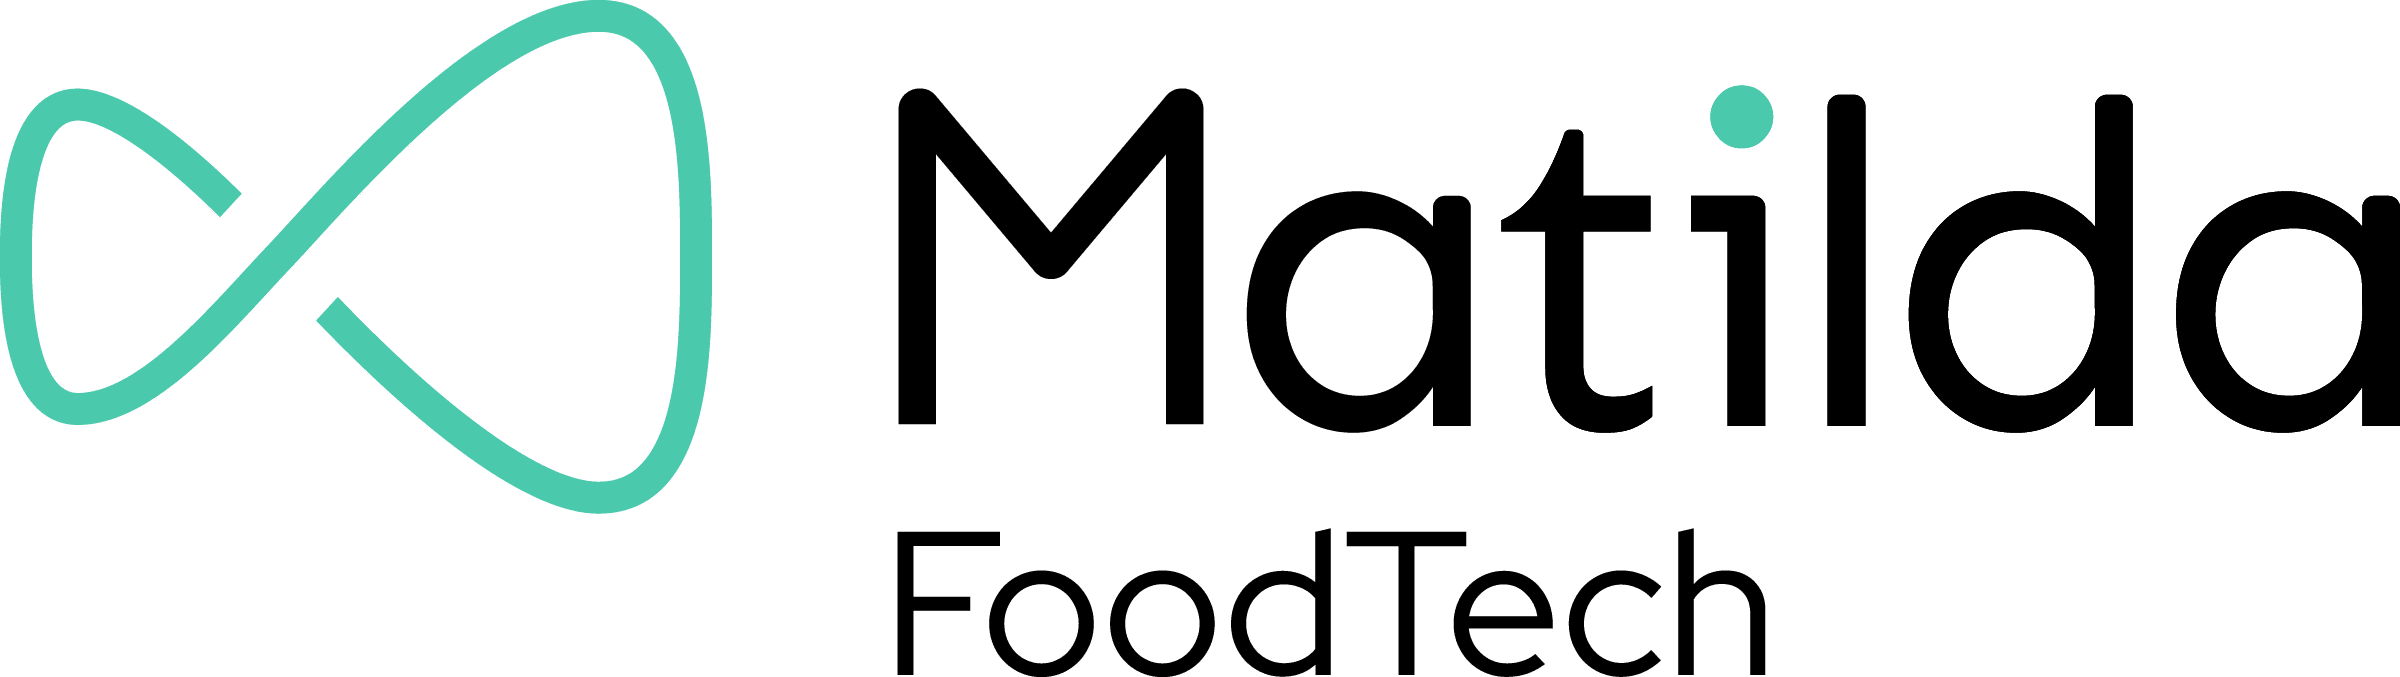 Matilda FoodTech